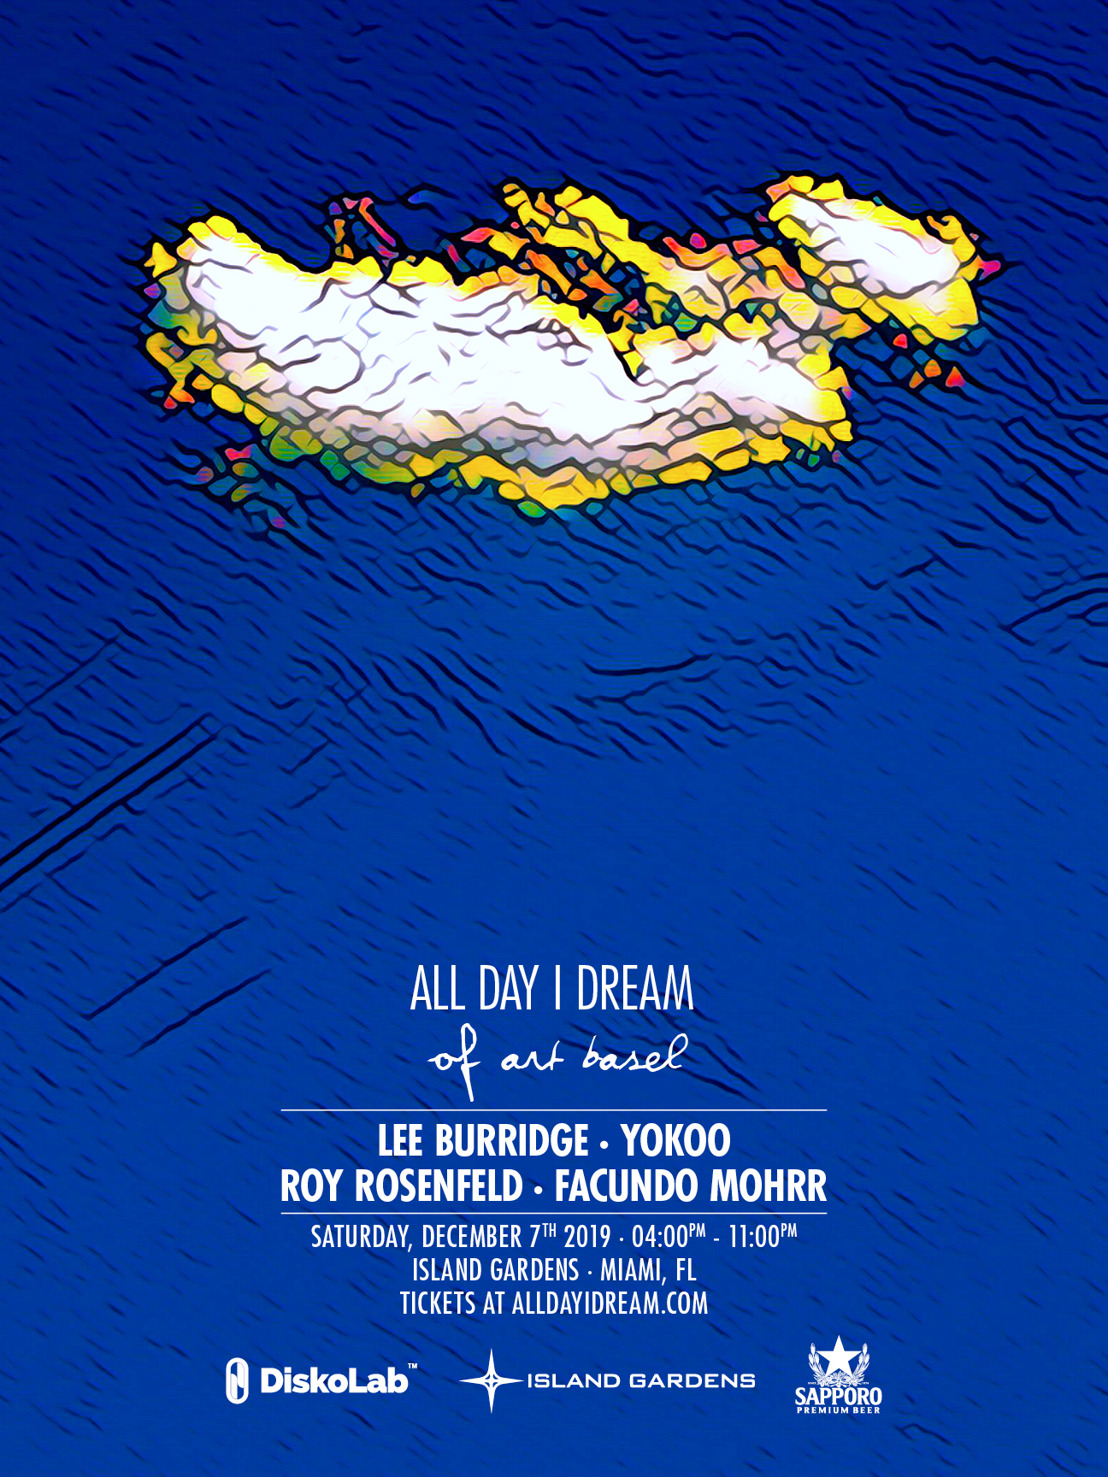 All Day I Dream Announces All Day I Dream of Art Basel